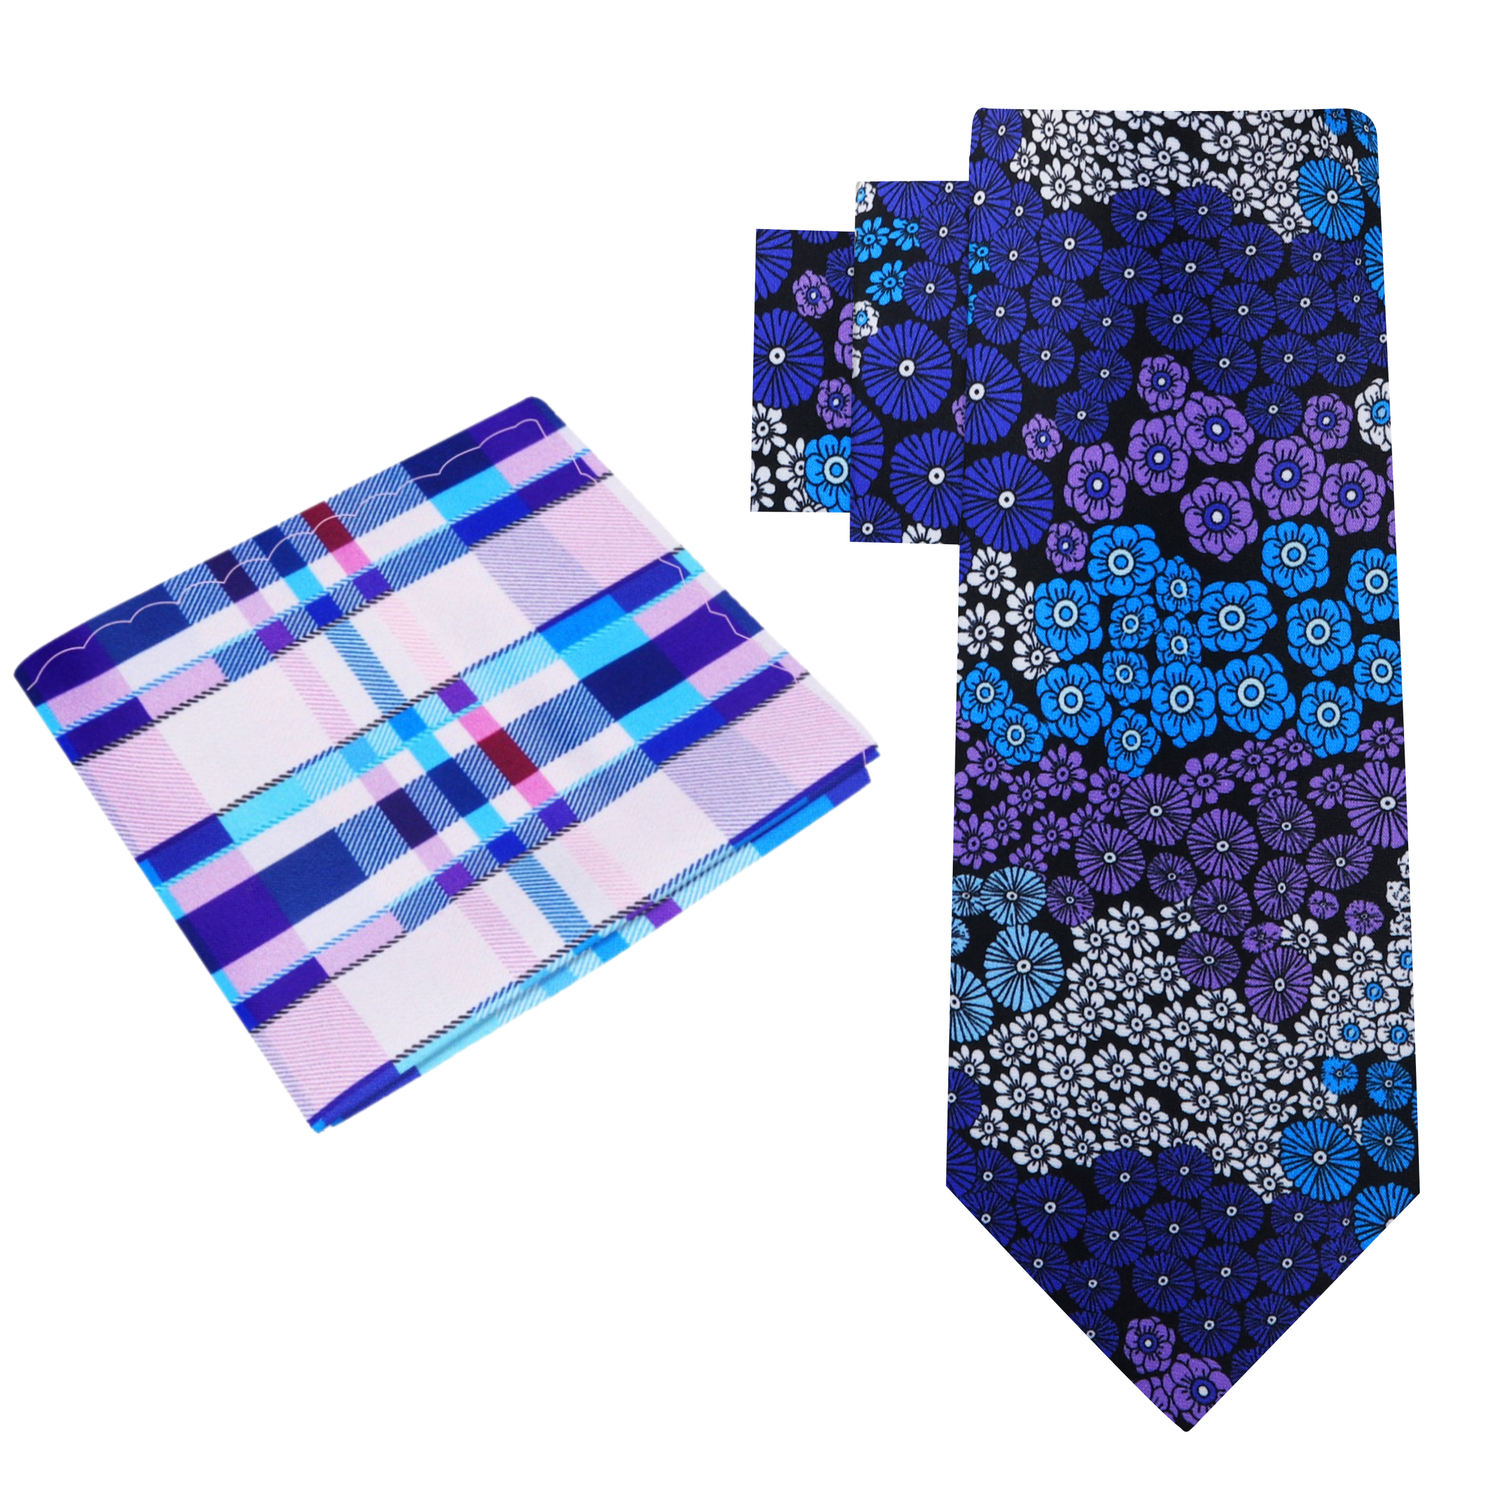 Alt view: Blue, Purple and White Flowers Necktie and Accenting Blue and White, blue and Purple Plaid Square